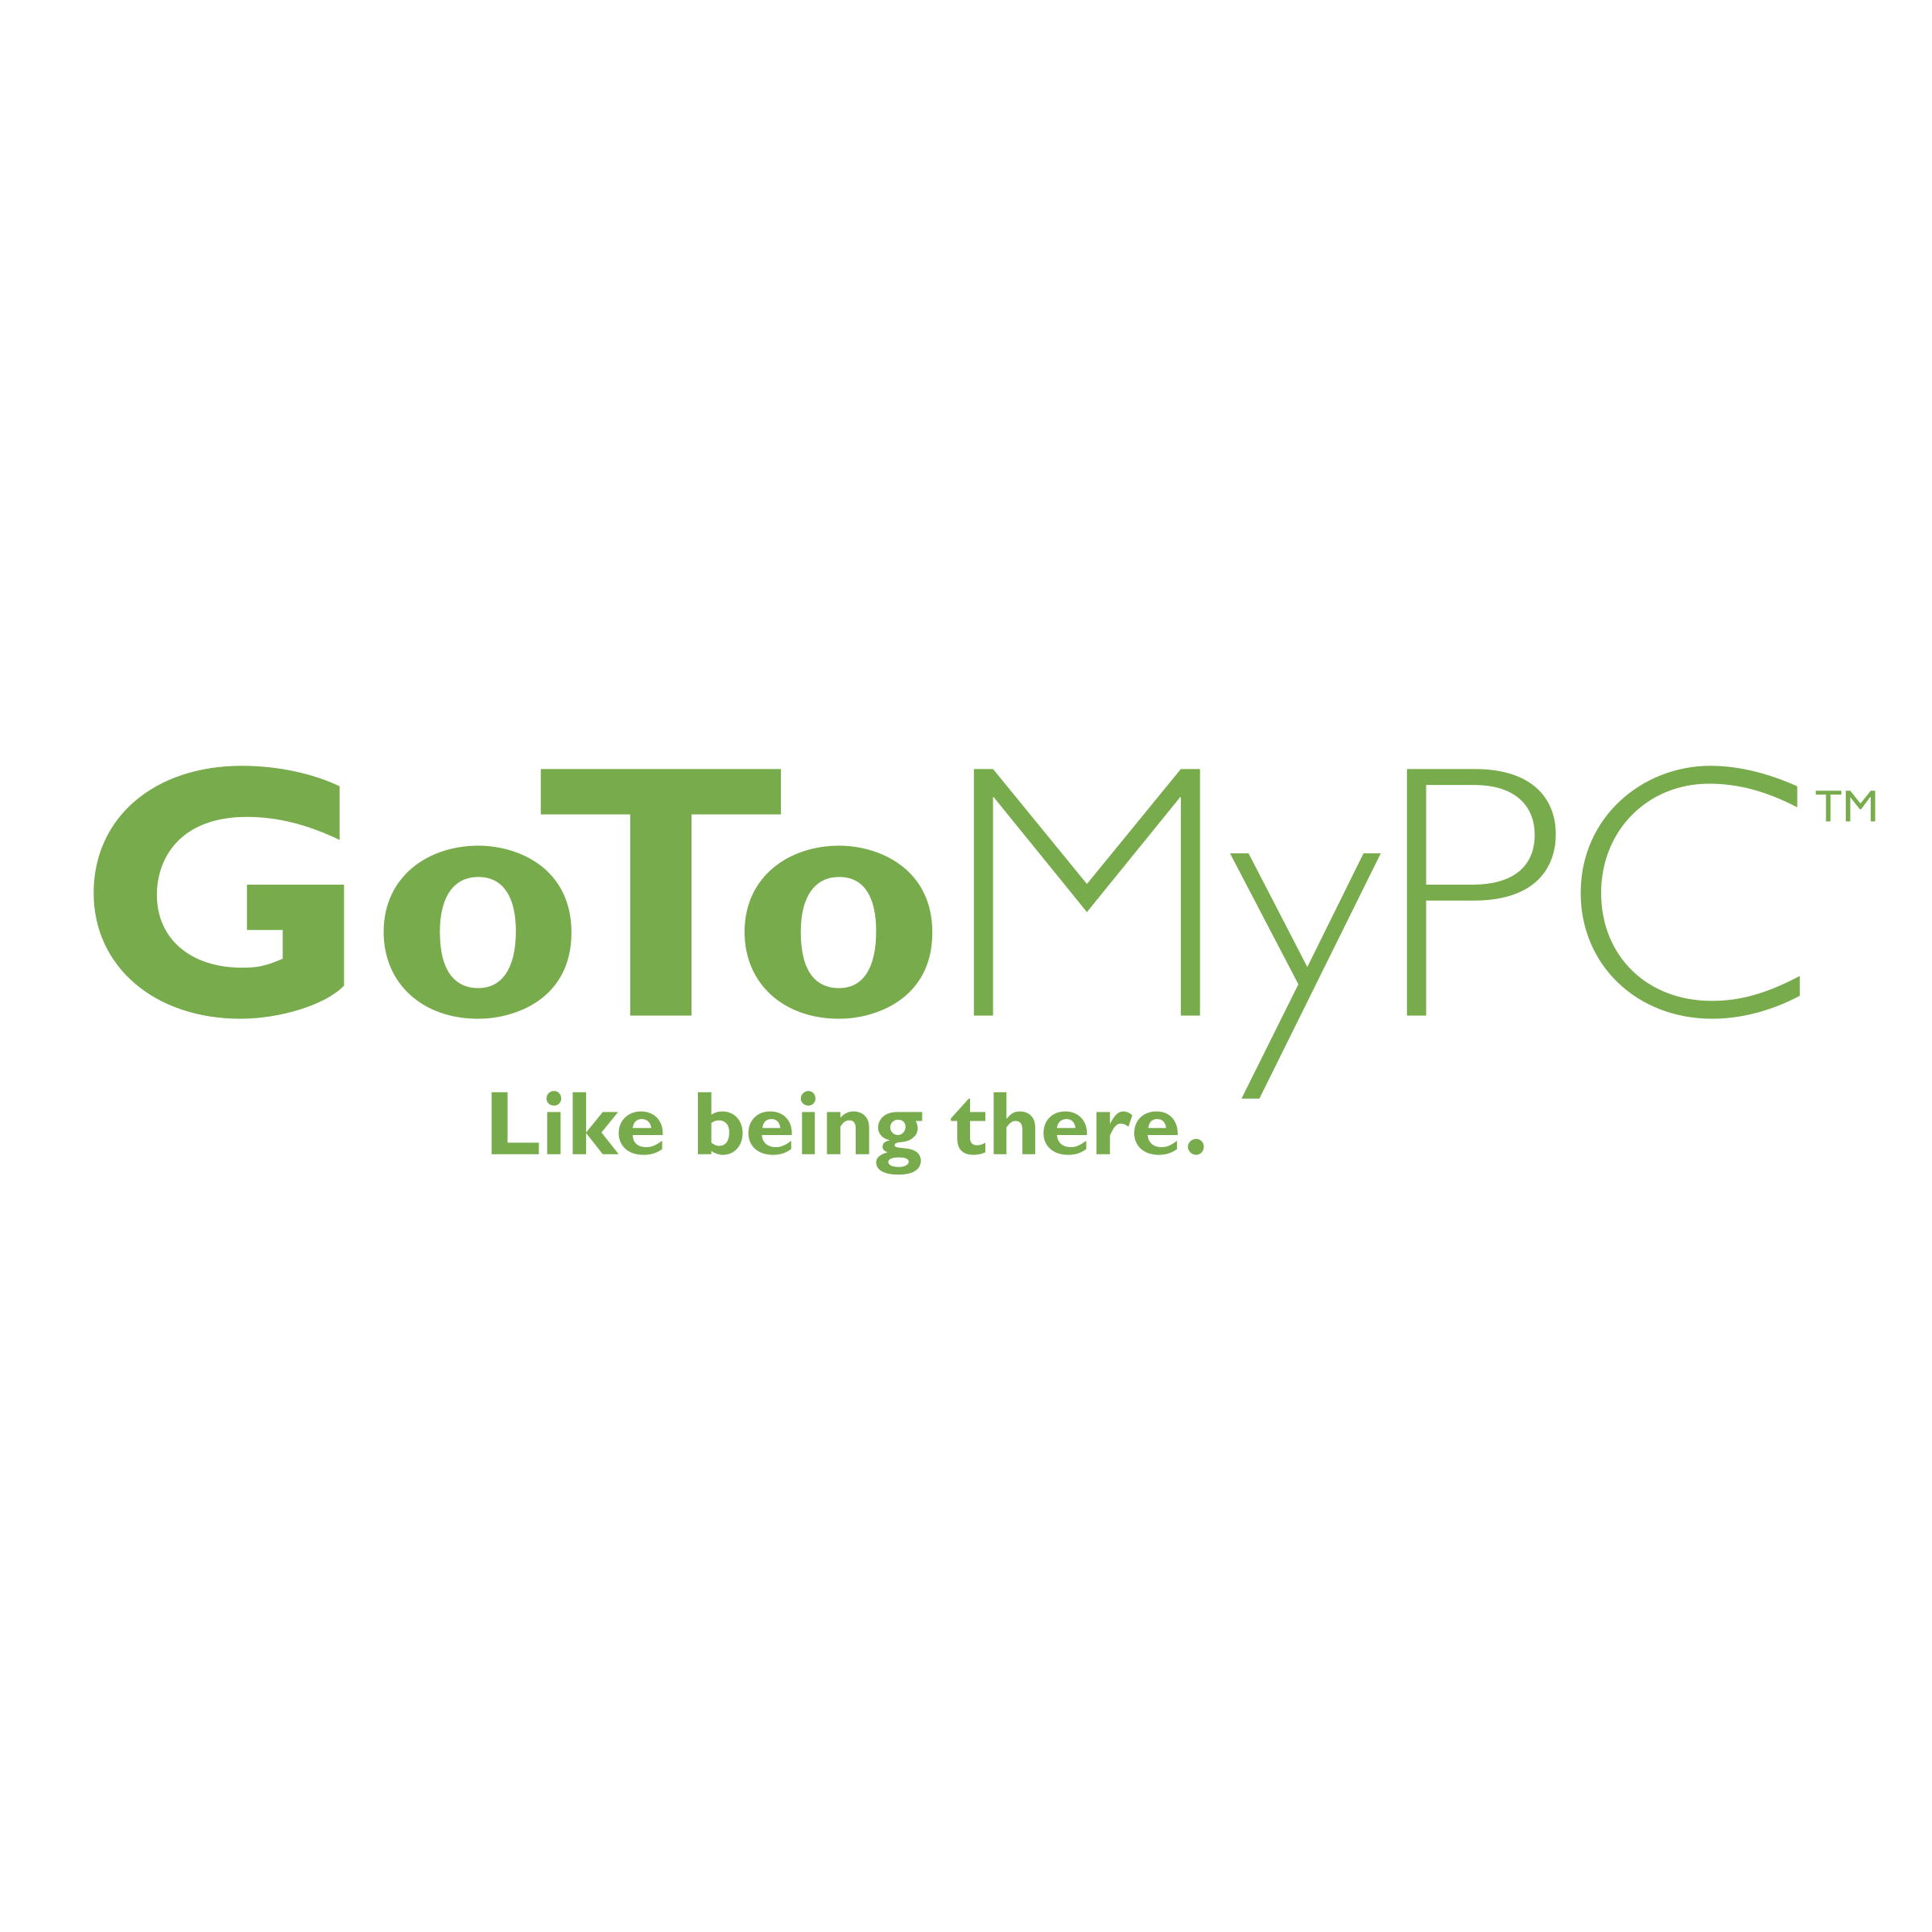 gotomypc-logo-png-transparent.png